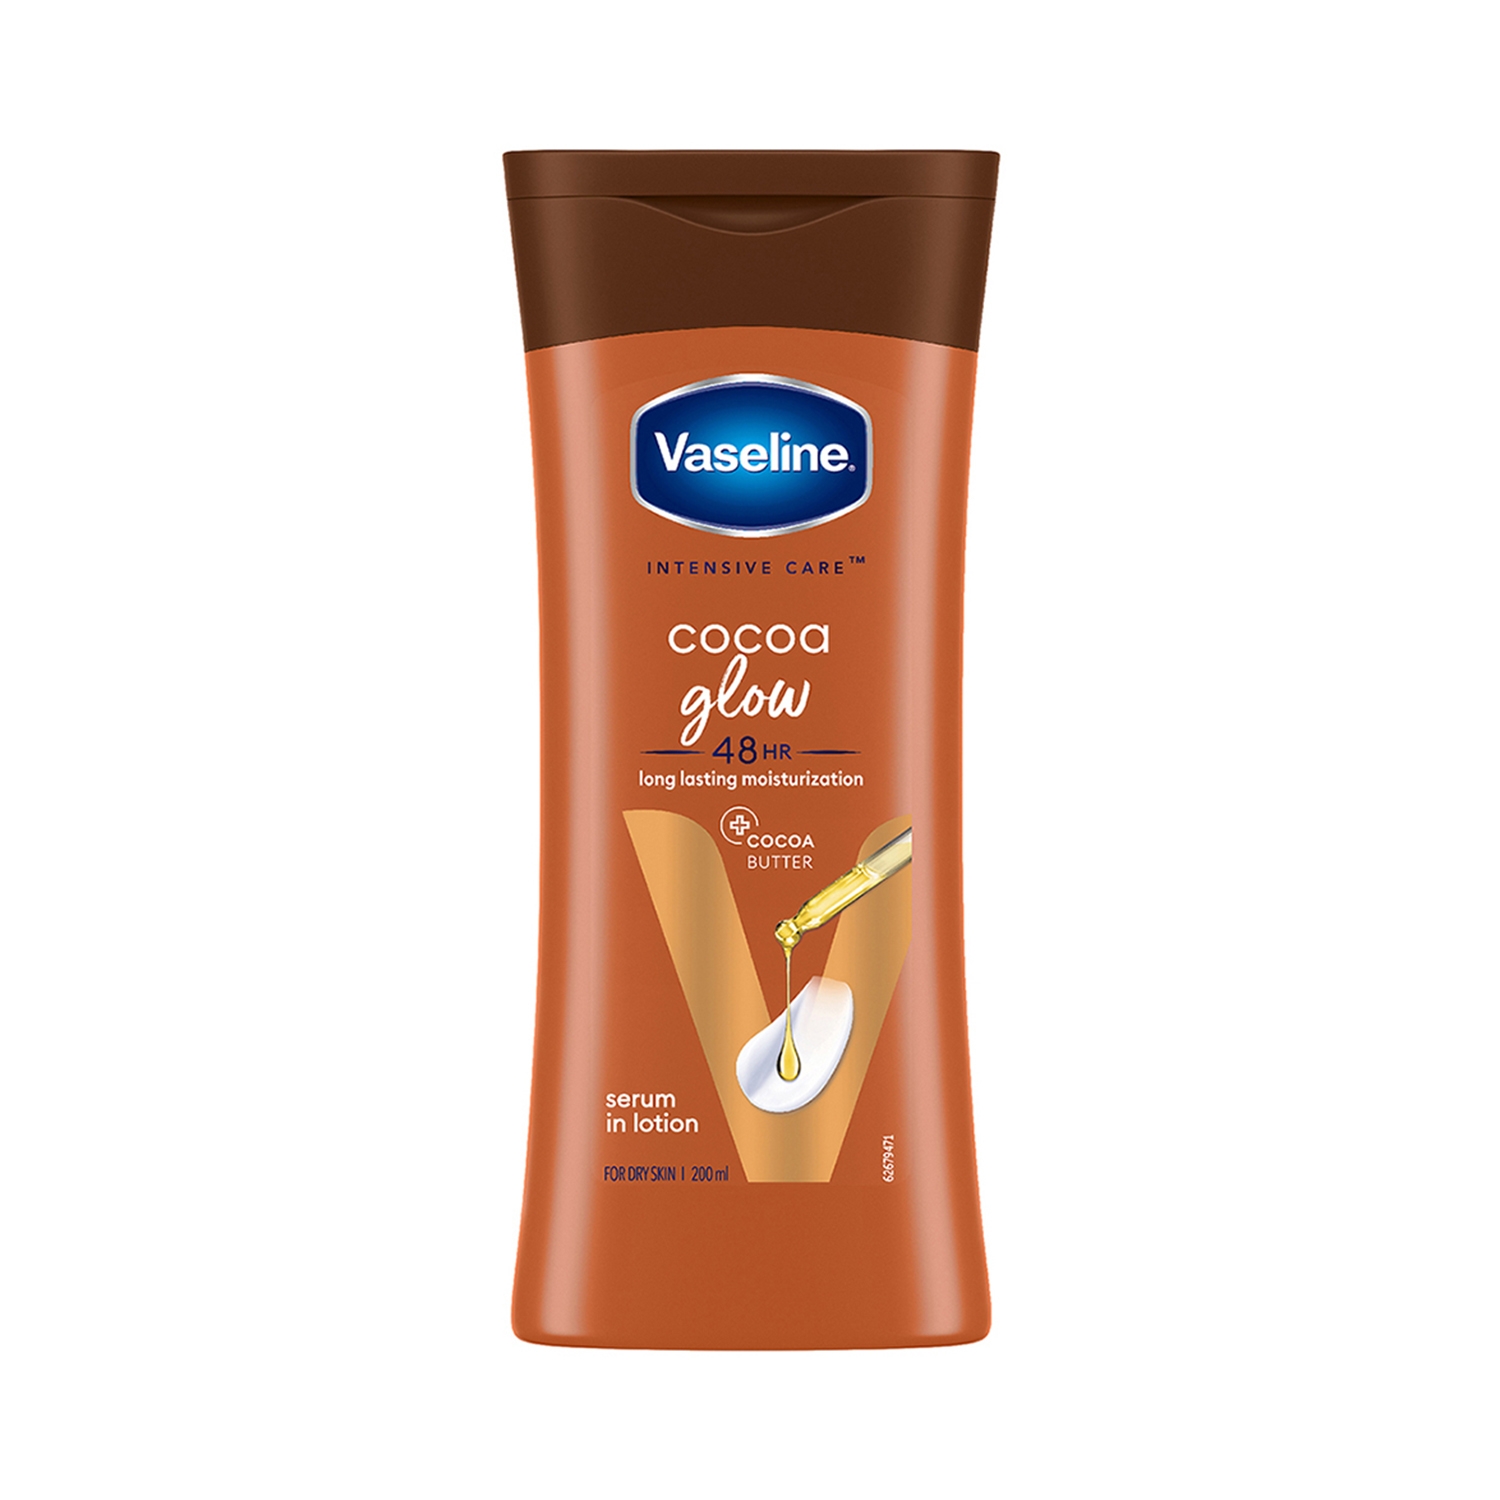 Vaseline Intensive Care Cocoa Glow Body Lotion - (200ml)